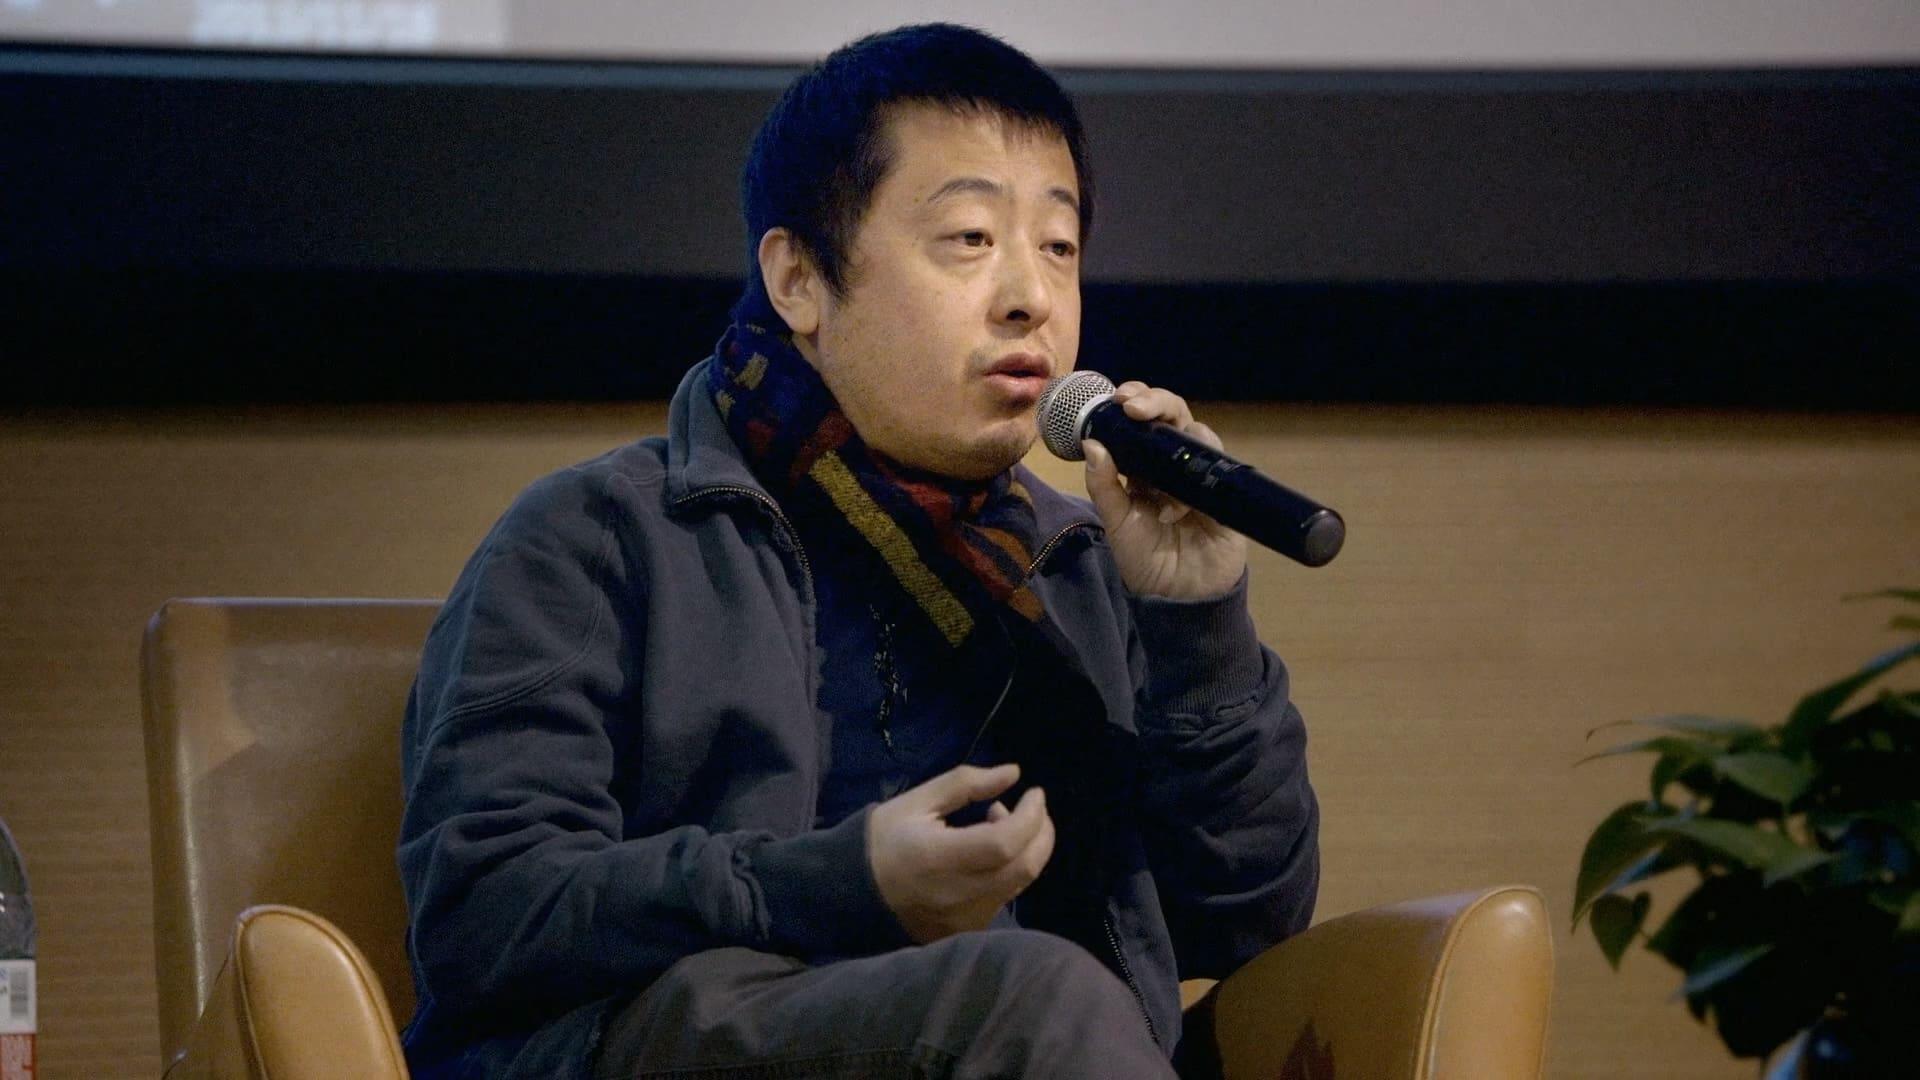 Jia Zhangke, A Guy from Fenyang backdrop